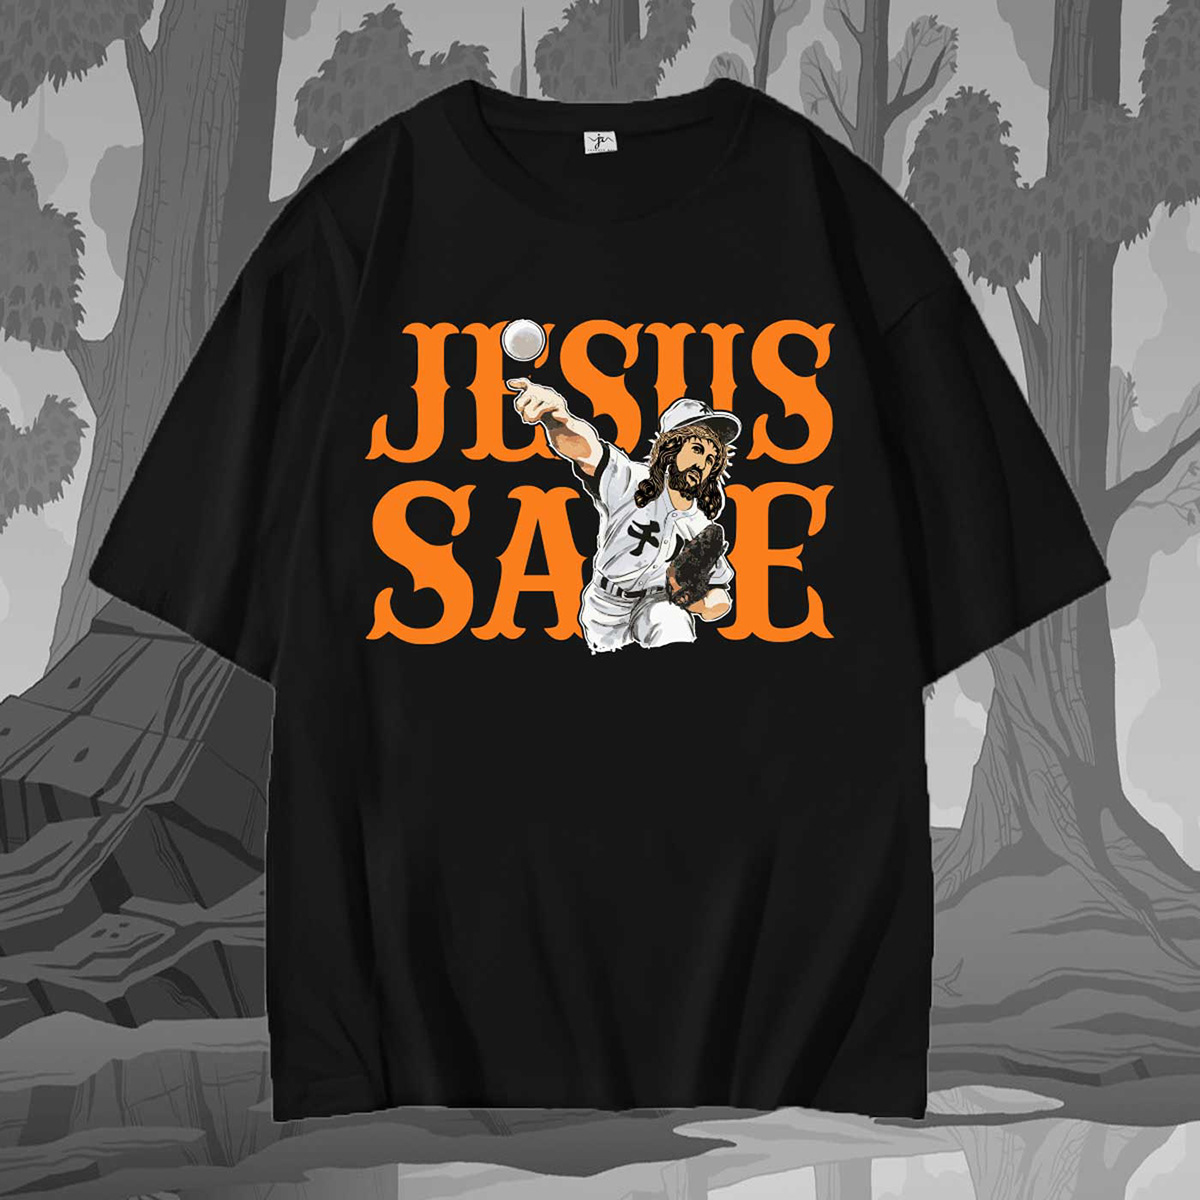 Jesus save t shirt.